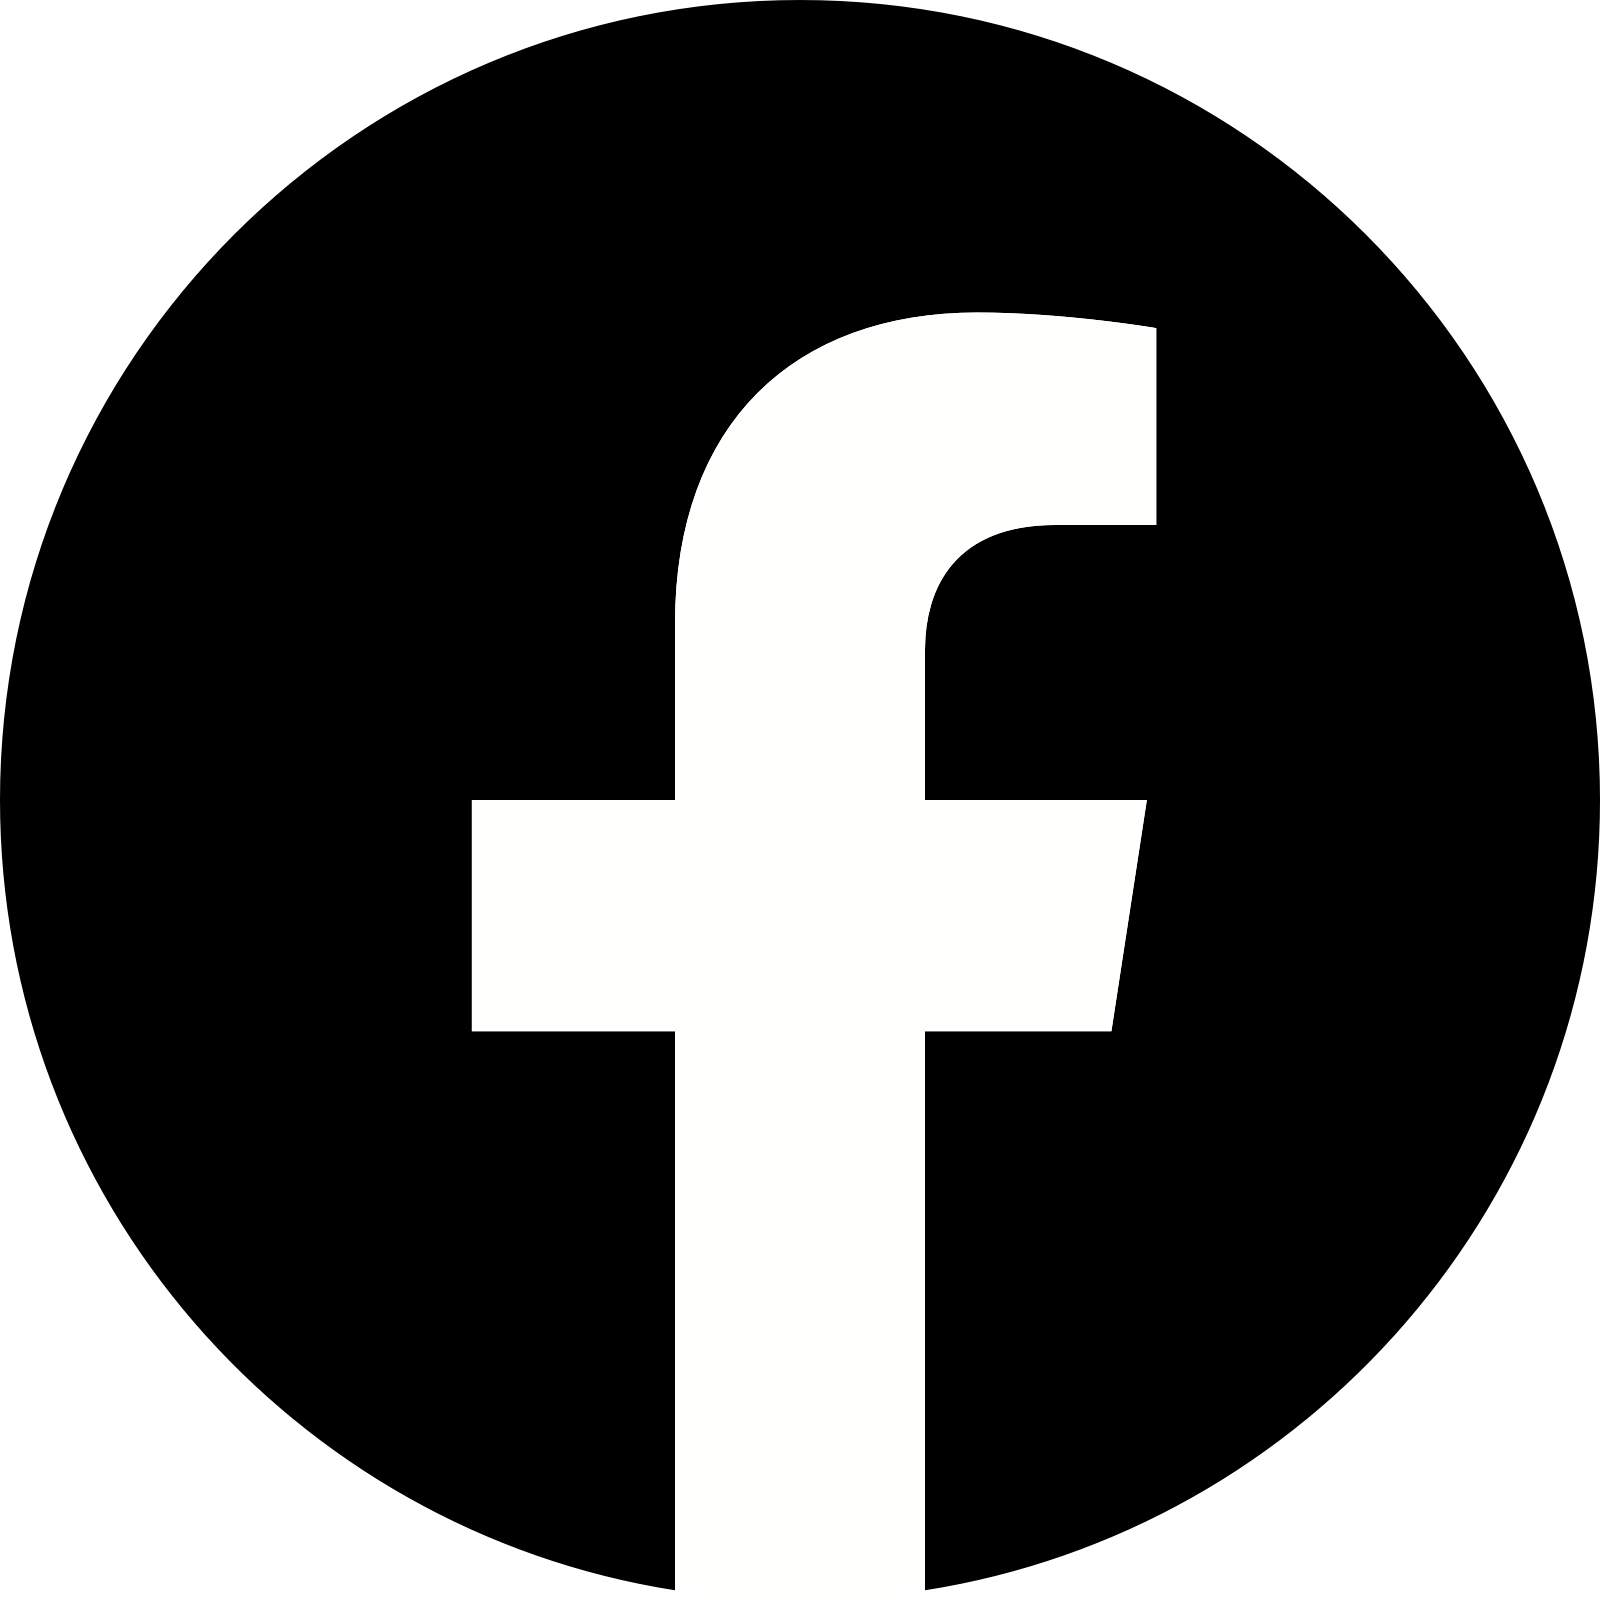 Facebook Logo Transparent Images